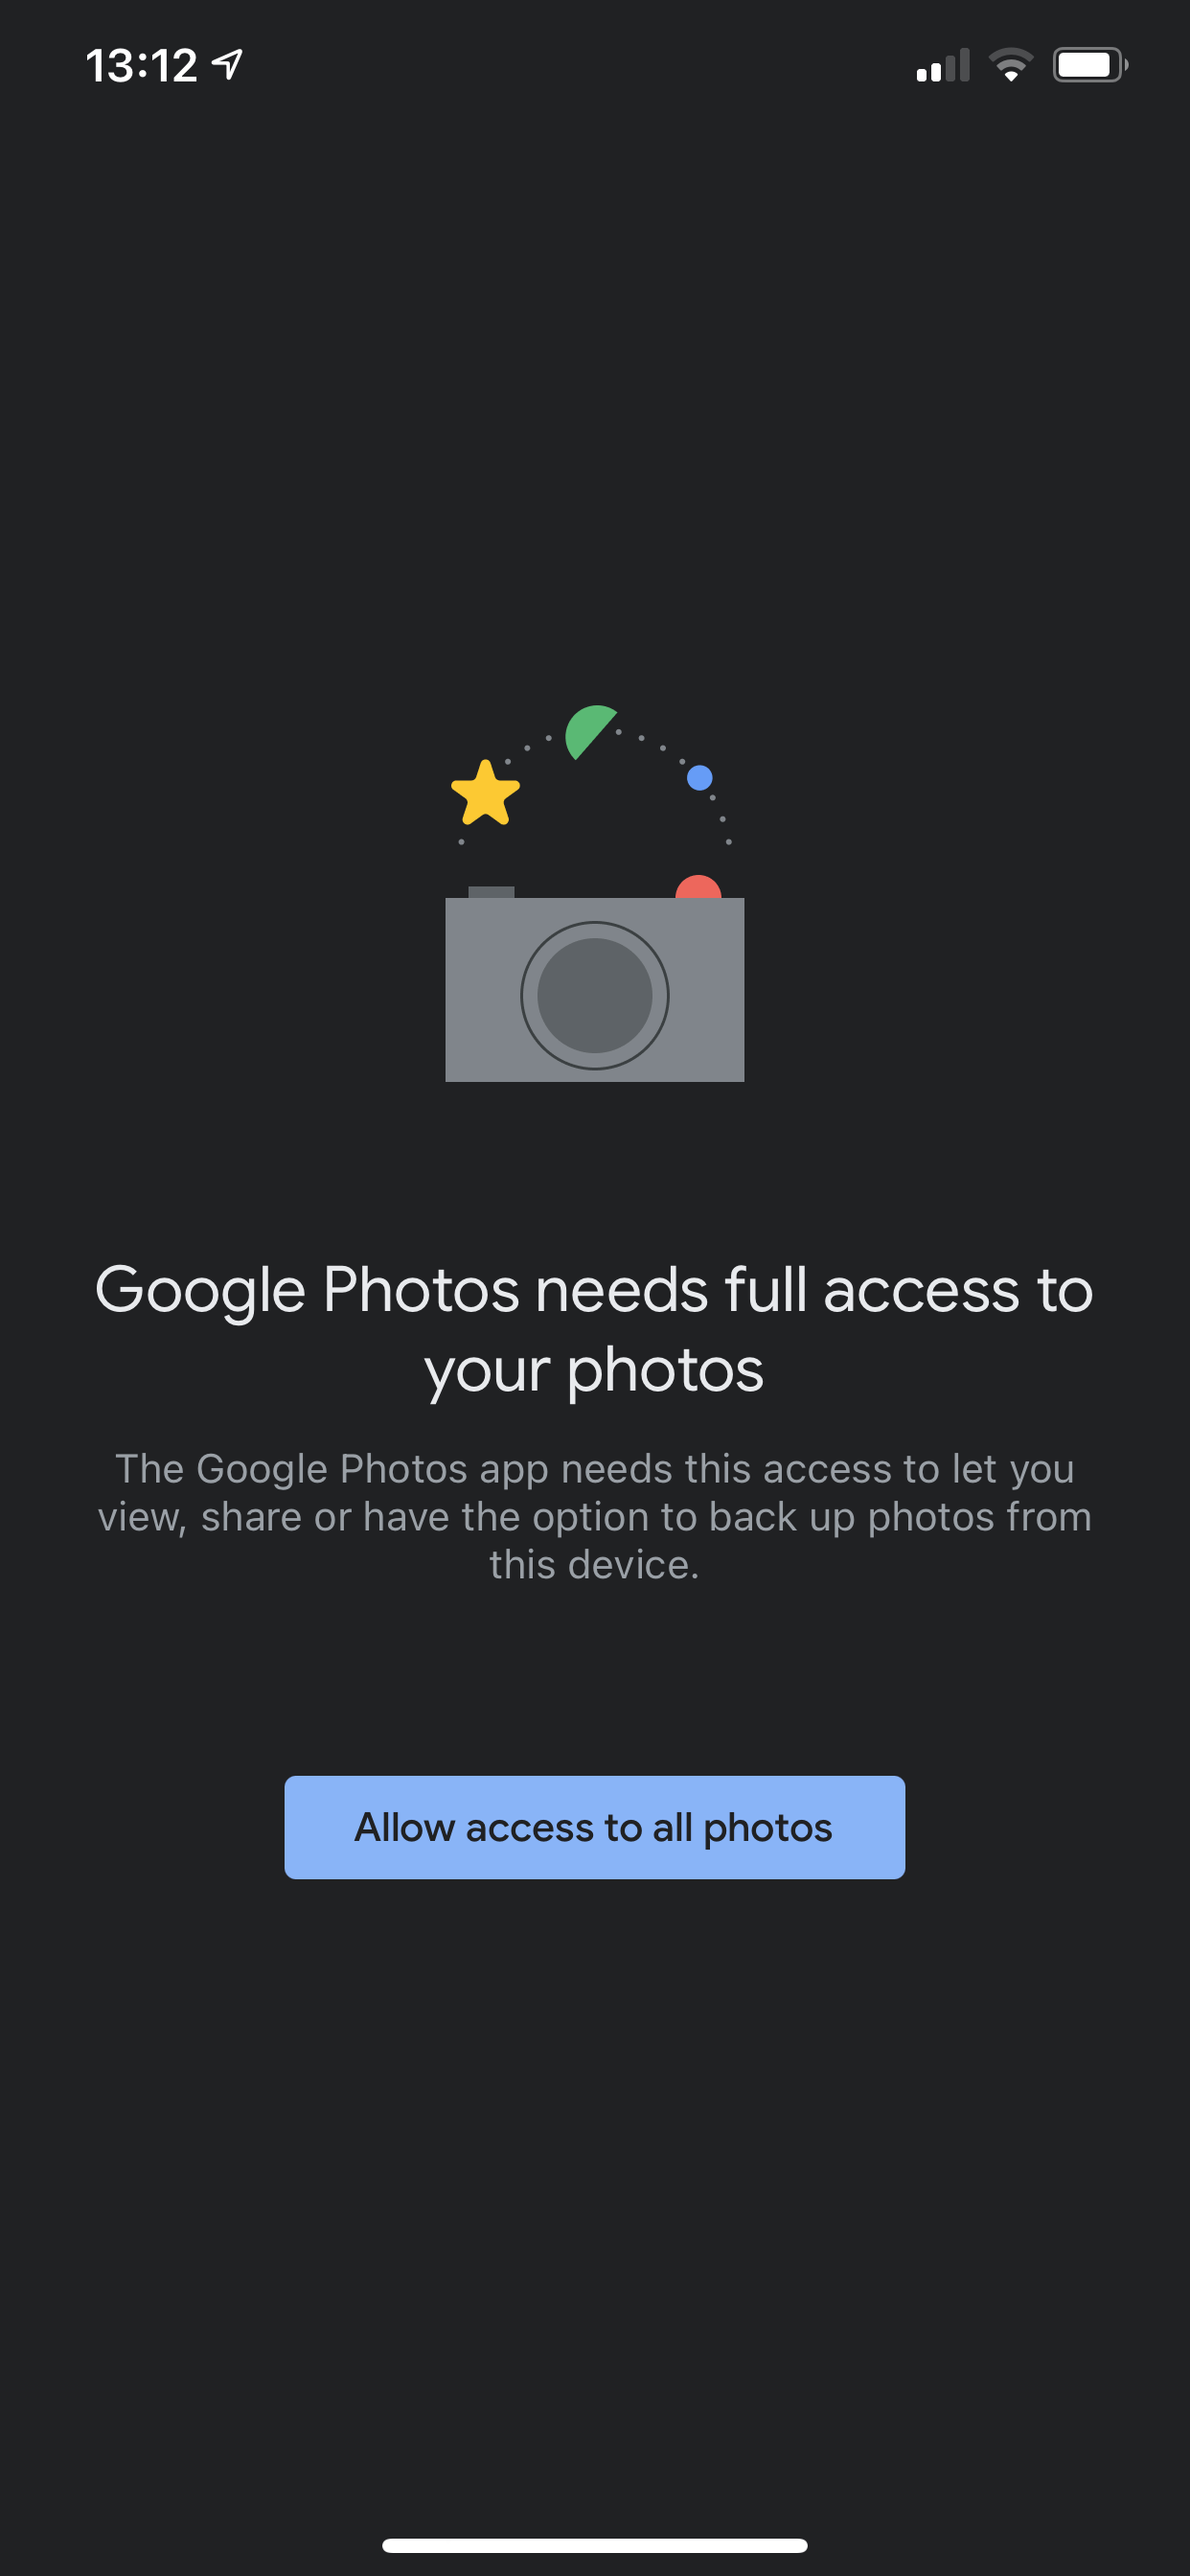 Google Photos asking permission to access photos.